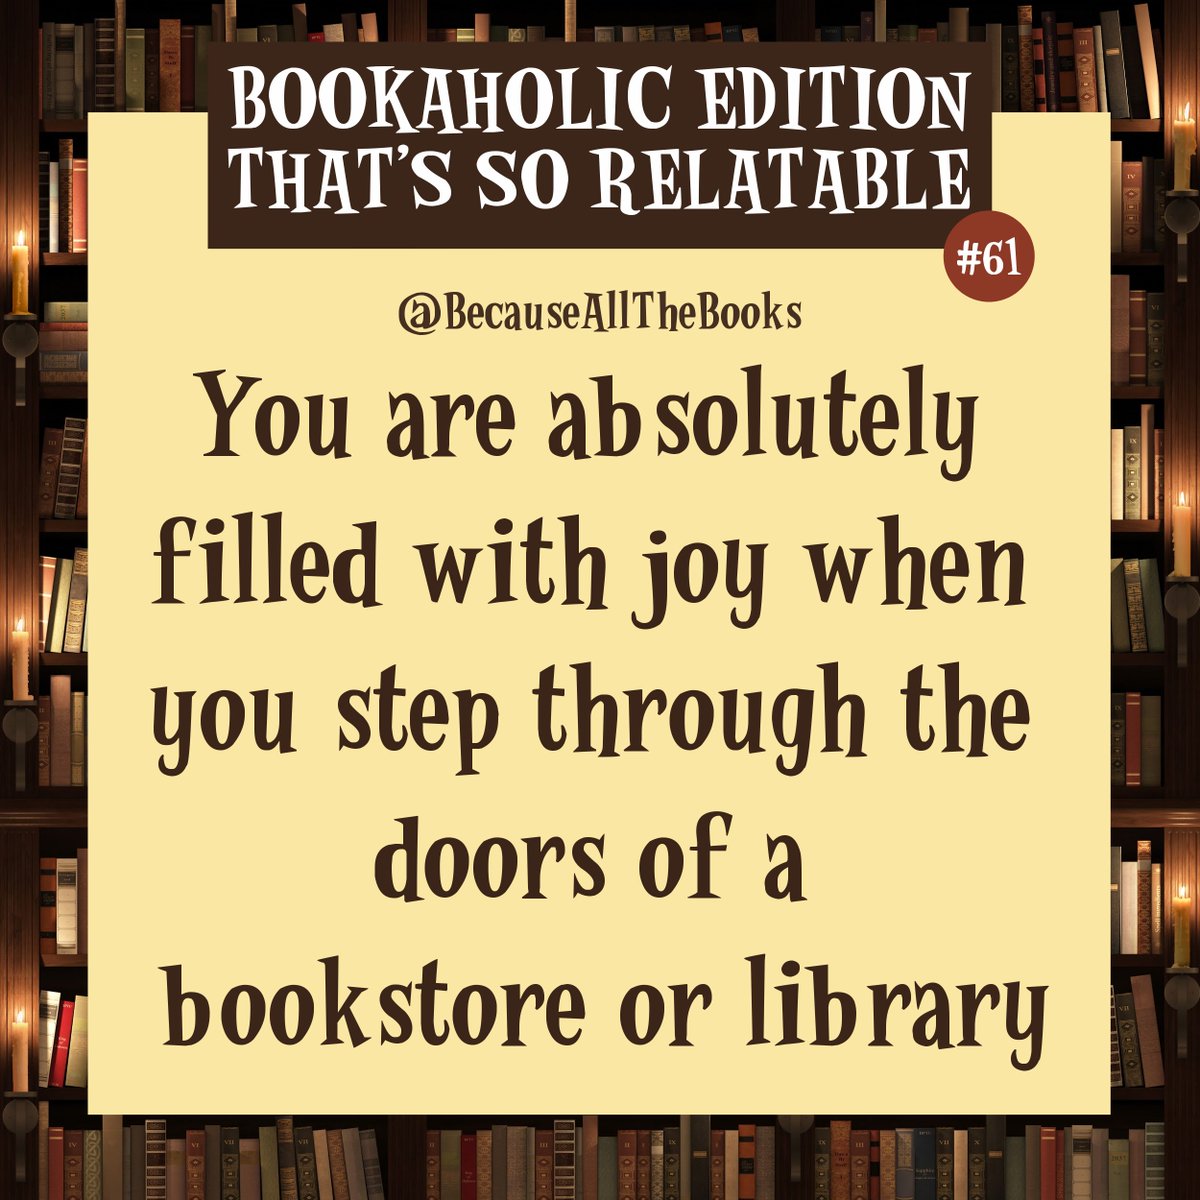 You know it!

#BecauseAllTheBooks #Bookworms #ReadingIsLife #BookAddicted #BookWormLife #BookLifestyle